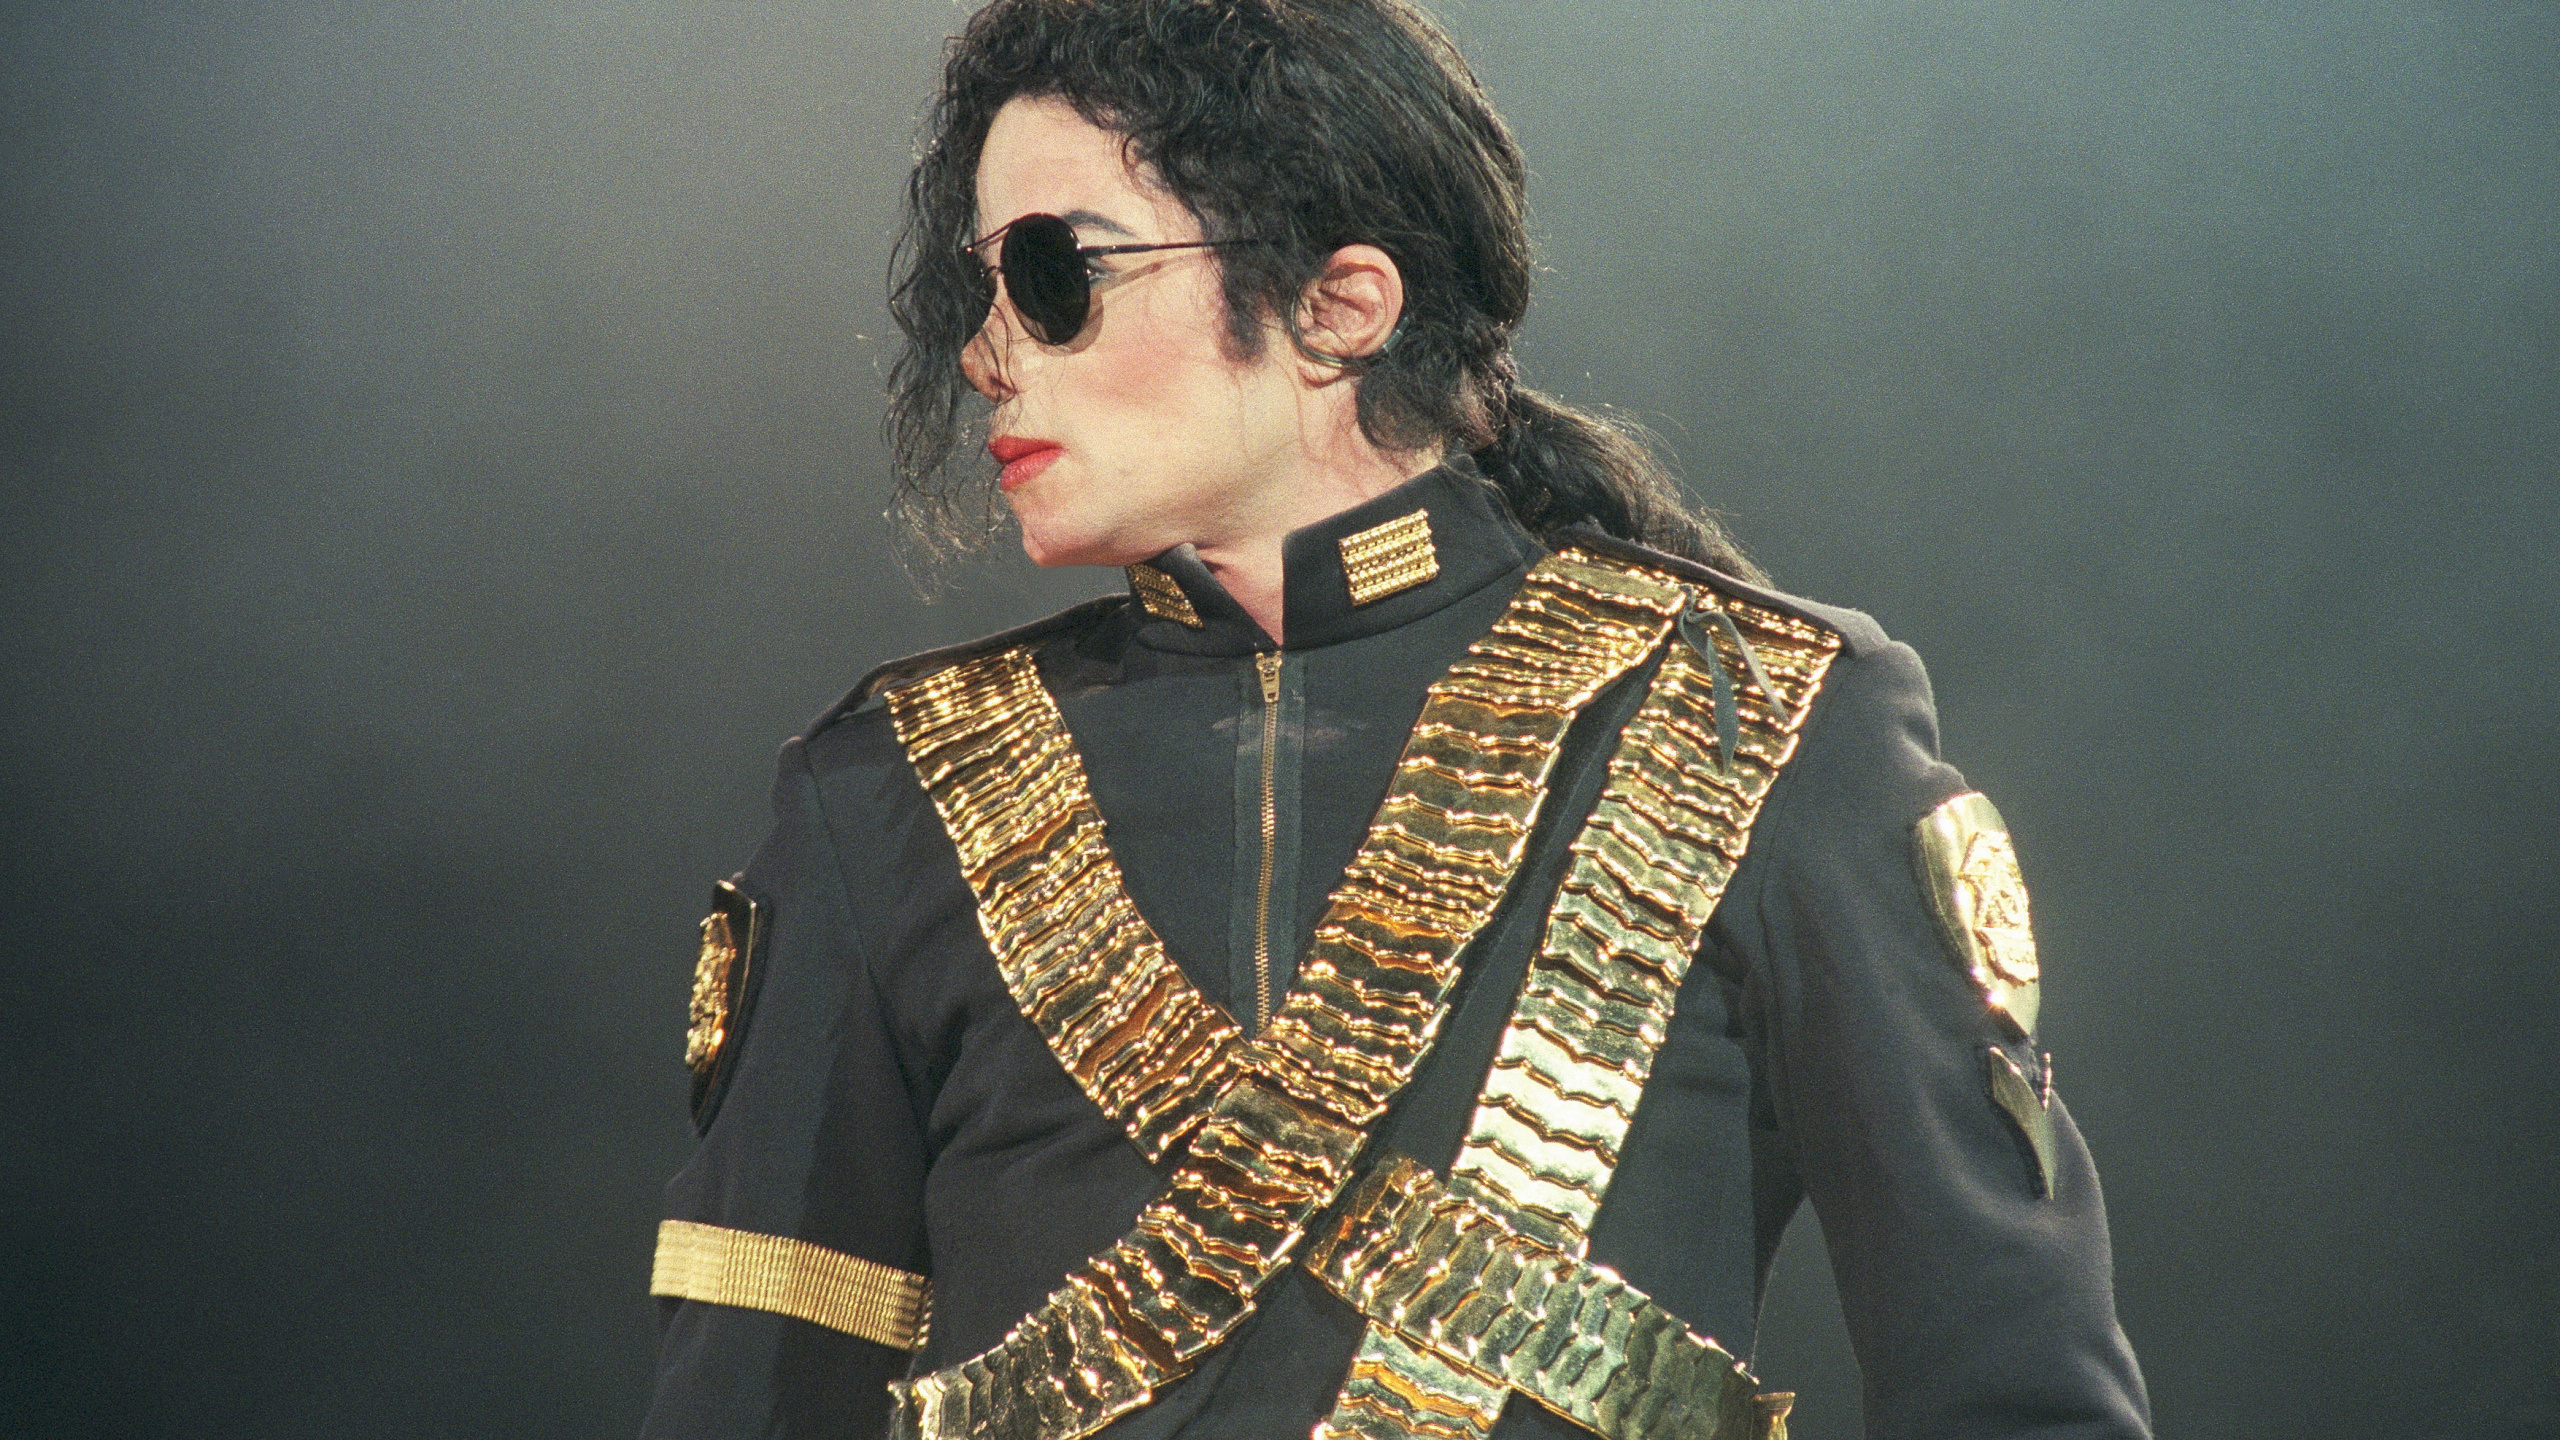 Michael Jackson, Leaving Neverland, Death of Michael Jackson, Musician, Fashion. Wallpaper in 2560x1440 Resolution